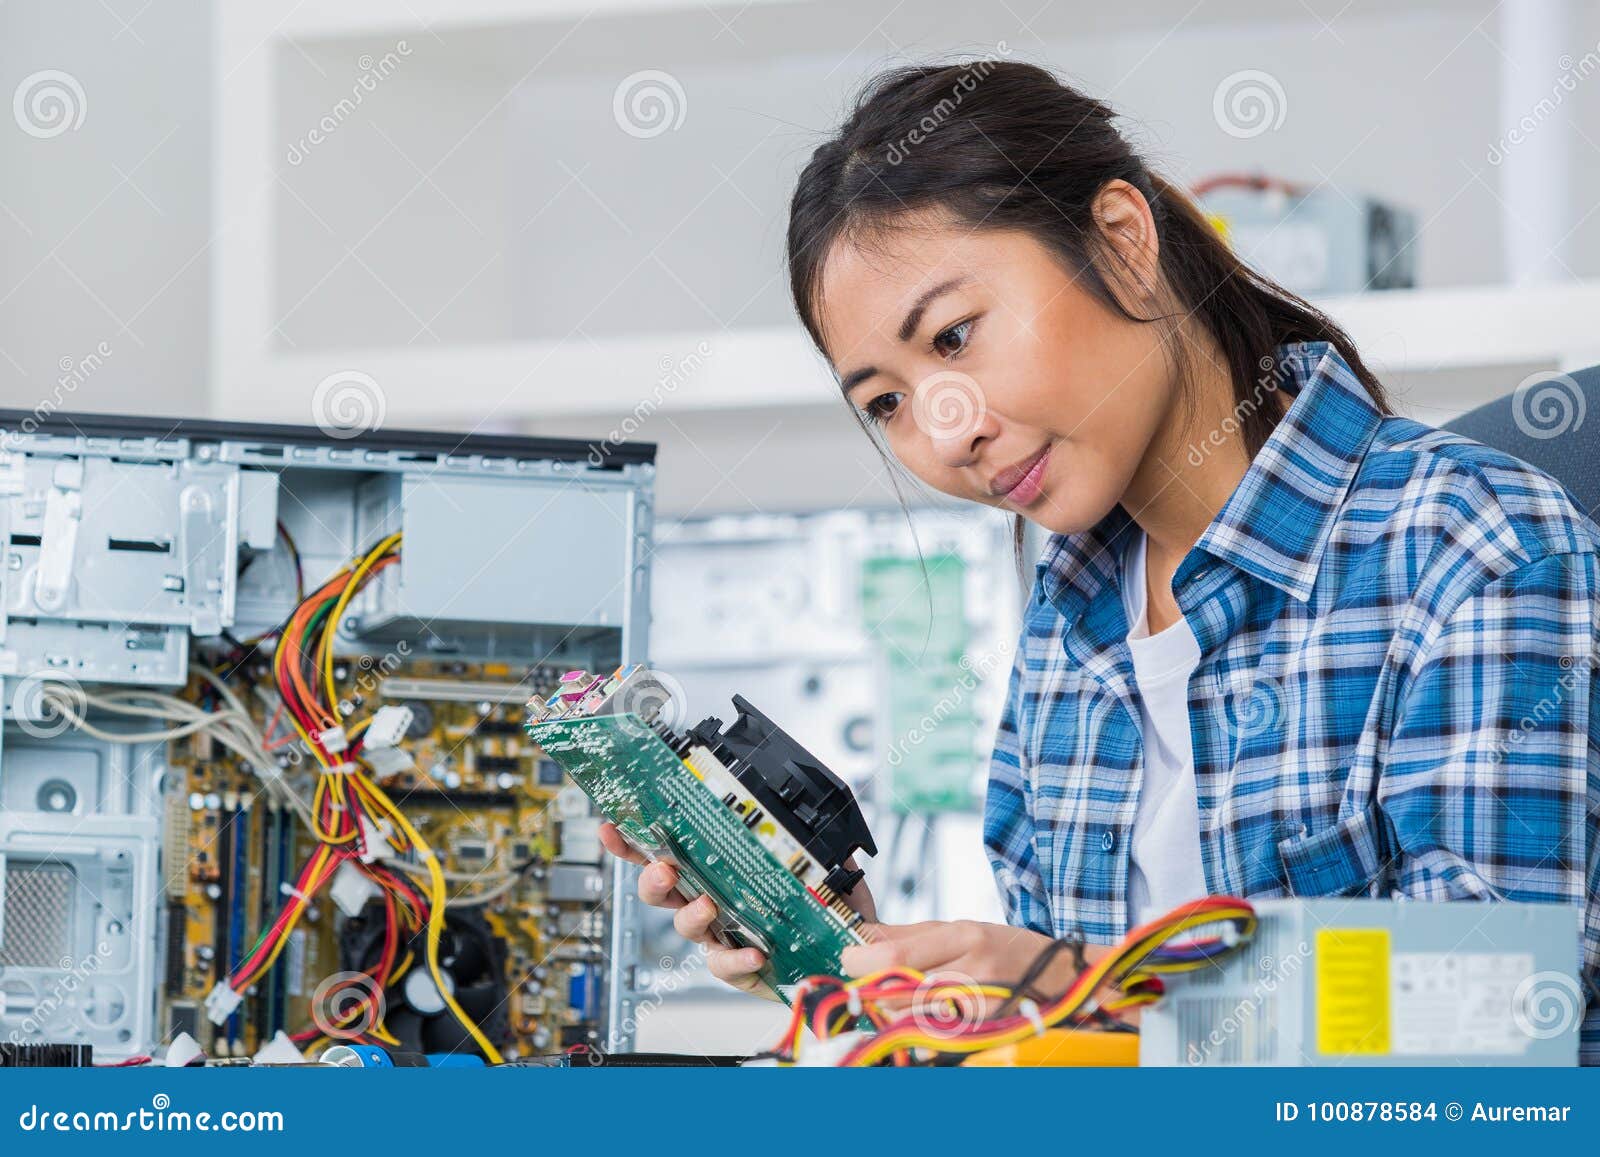 female pc technician posing next to disassembled desktop